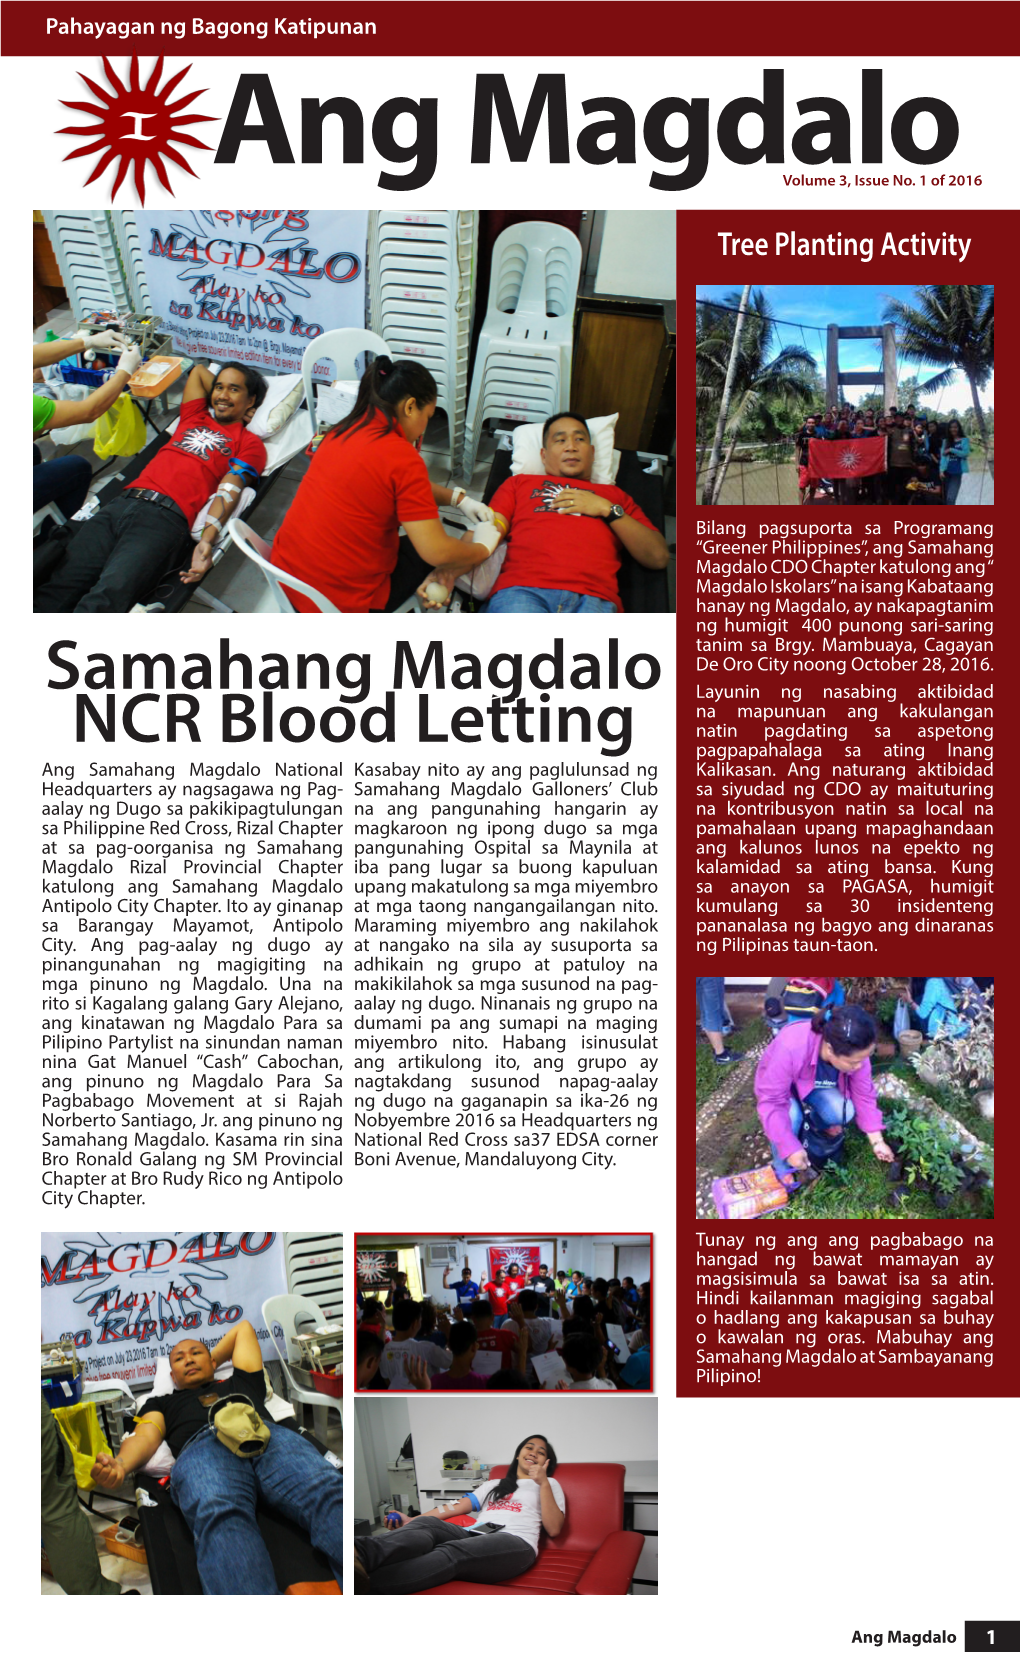 Samahang Magdalo NCR Blood Letting